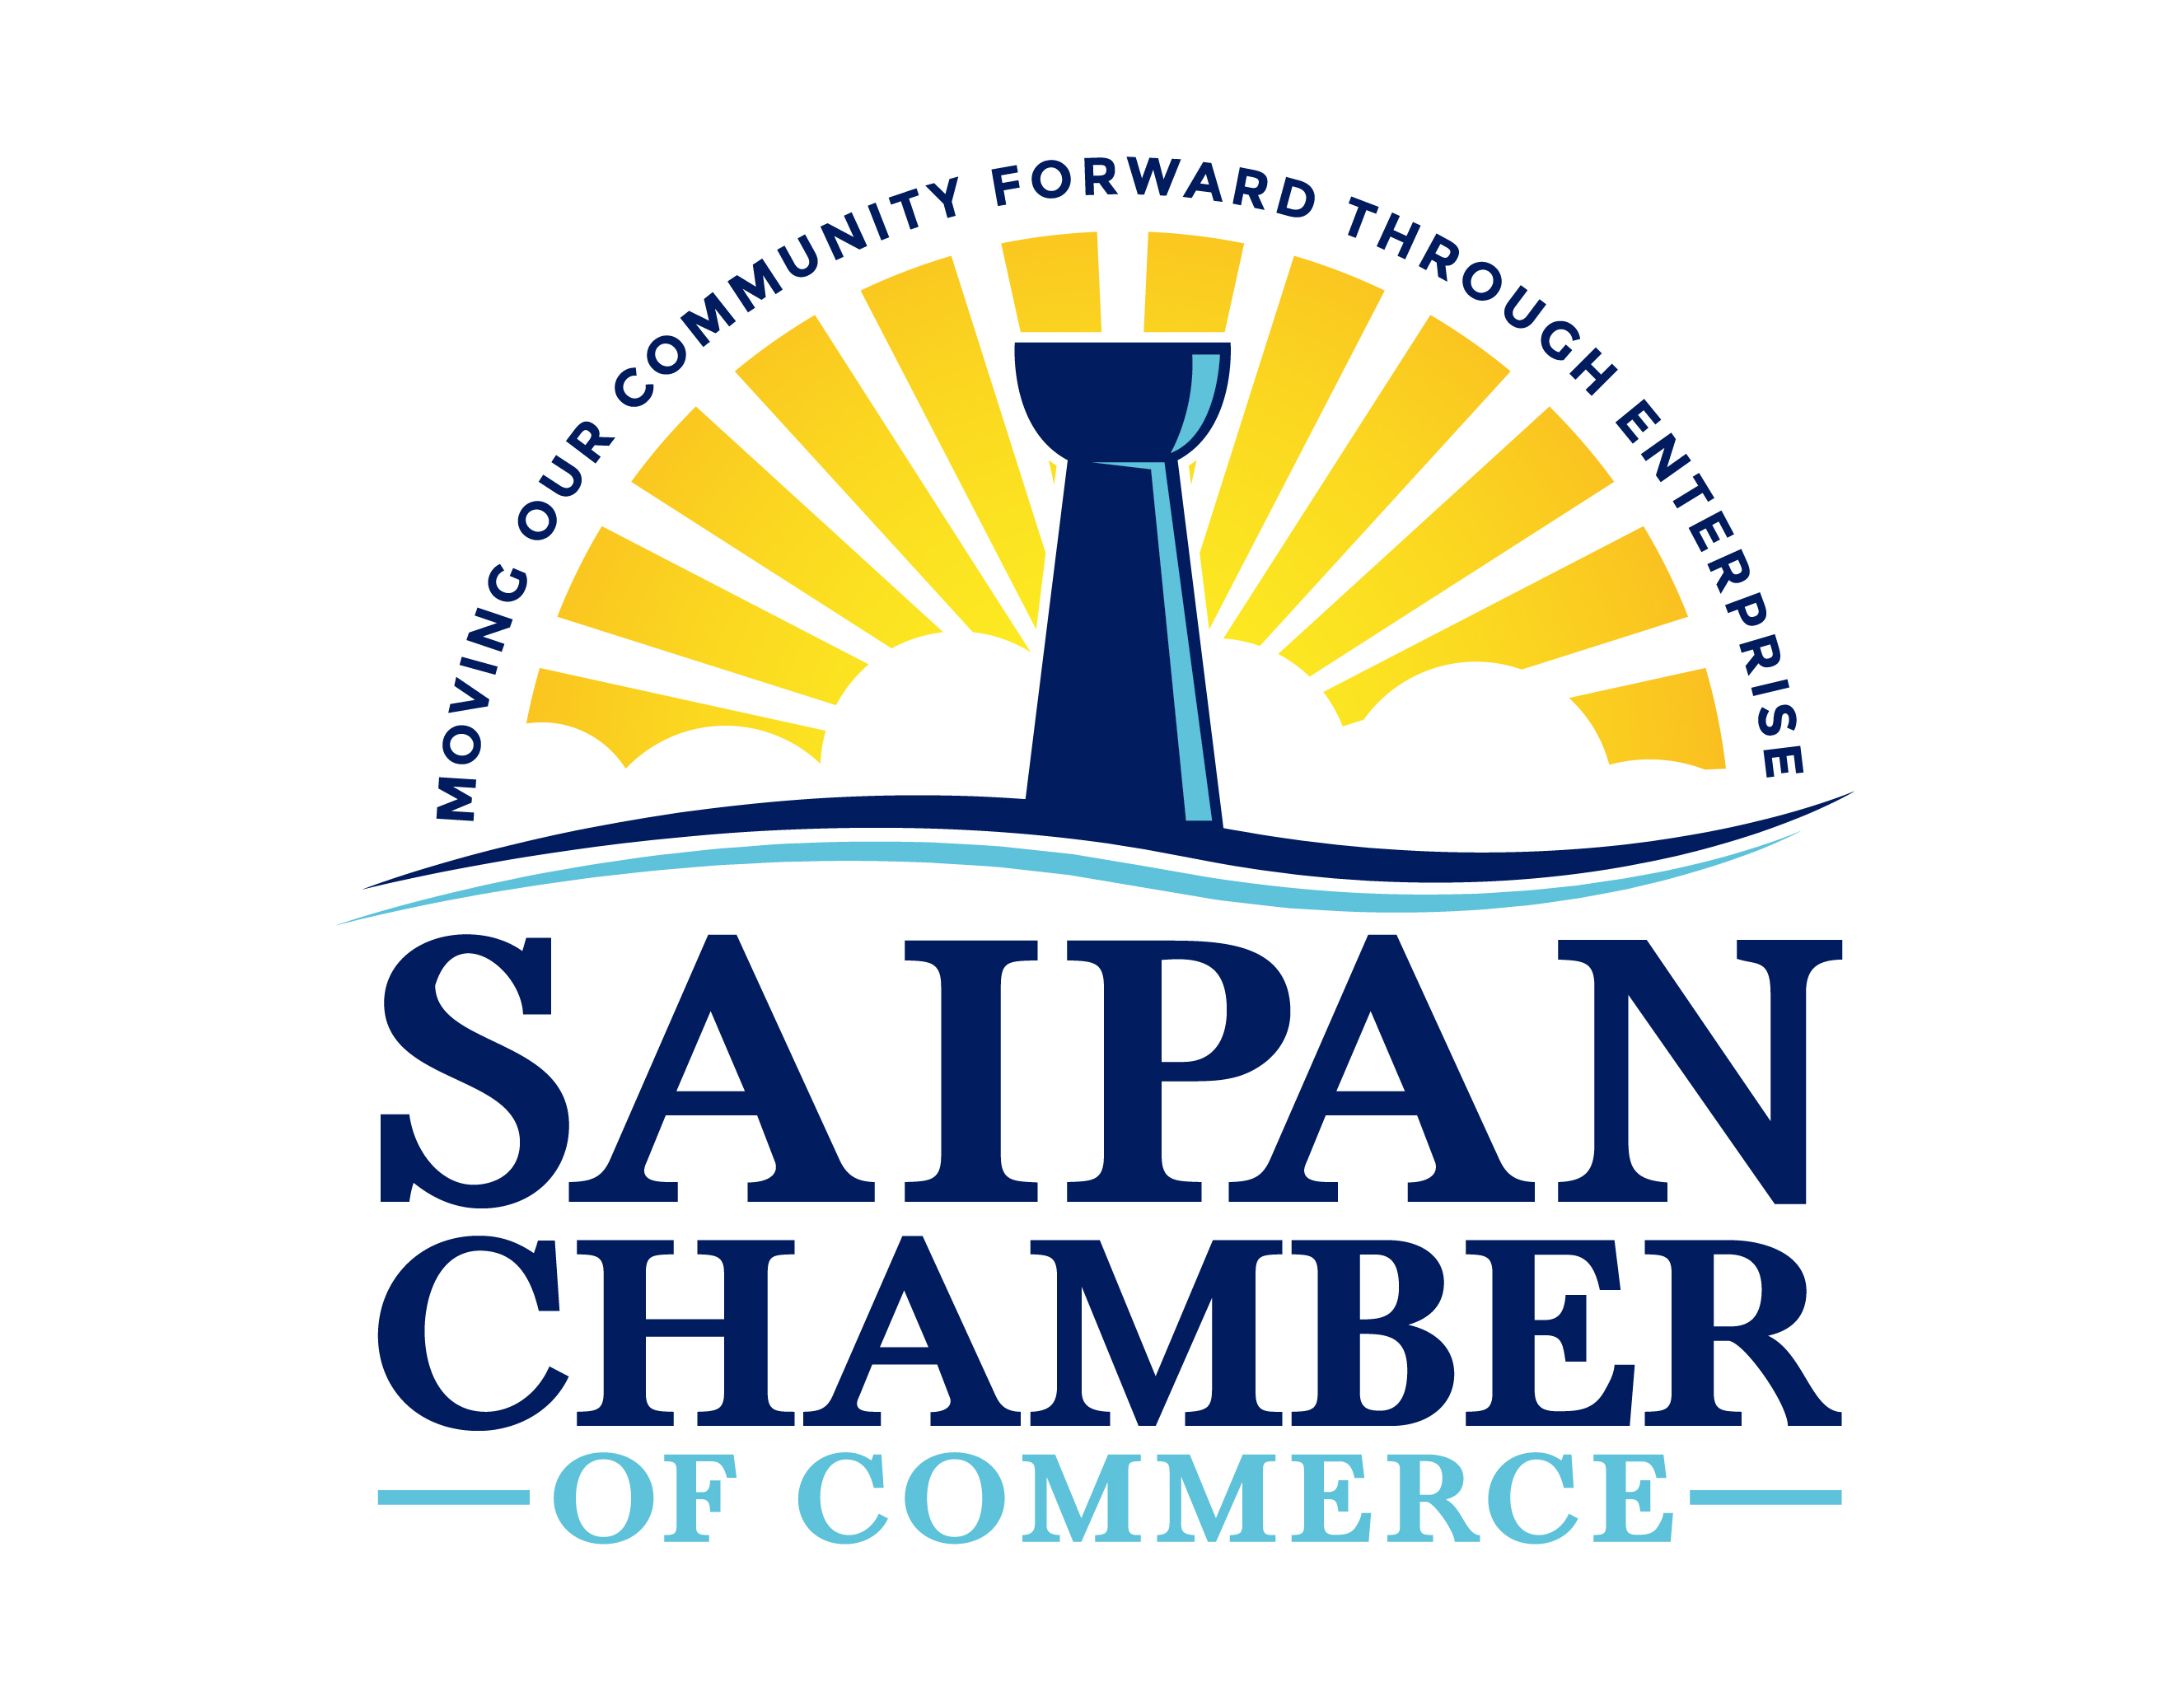 Saipan Chamber of Commerce logo